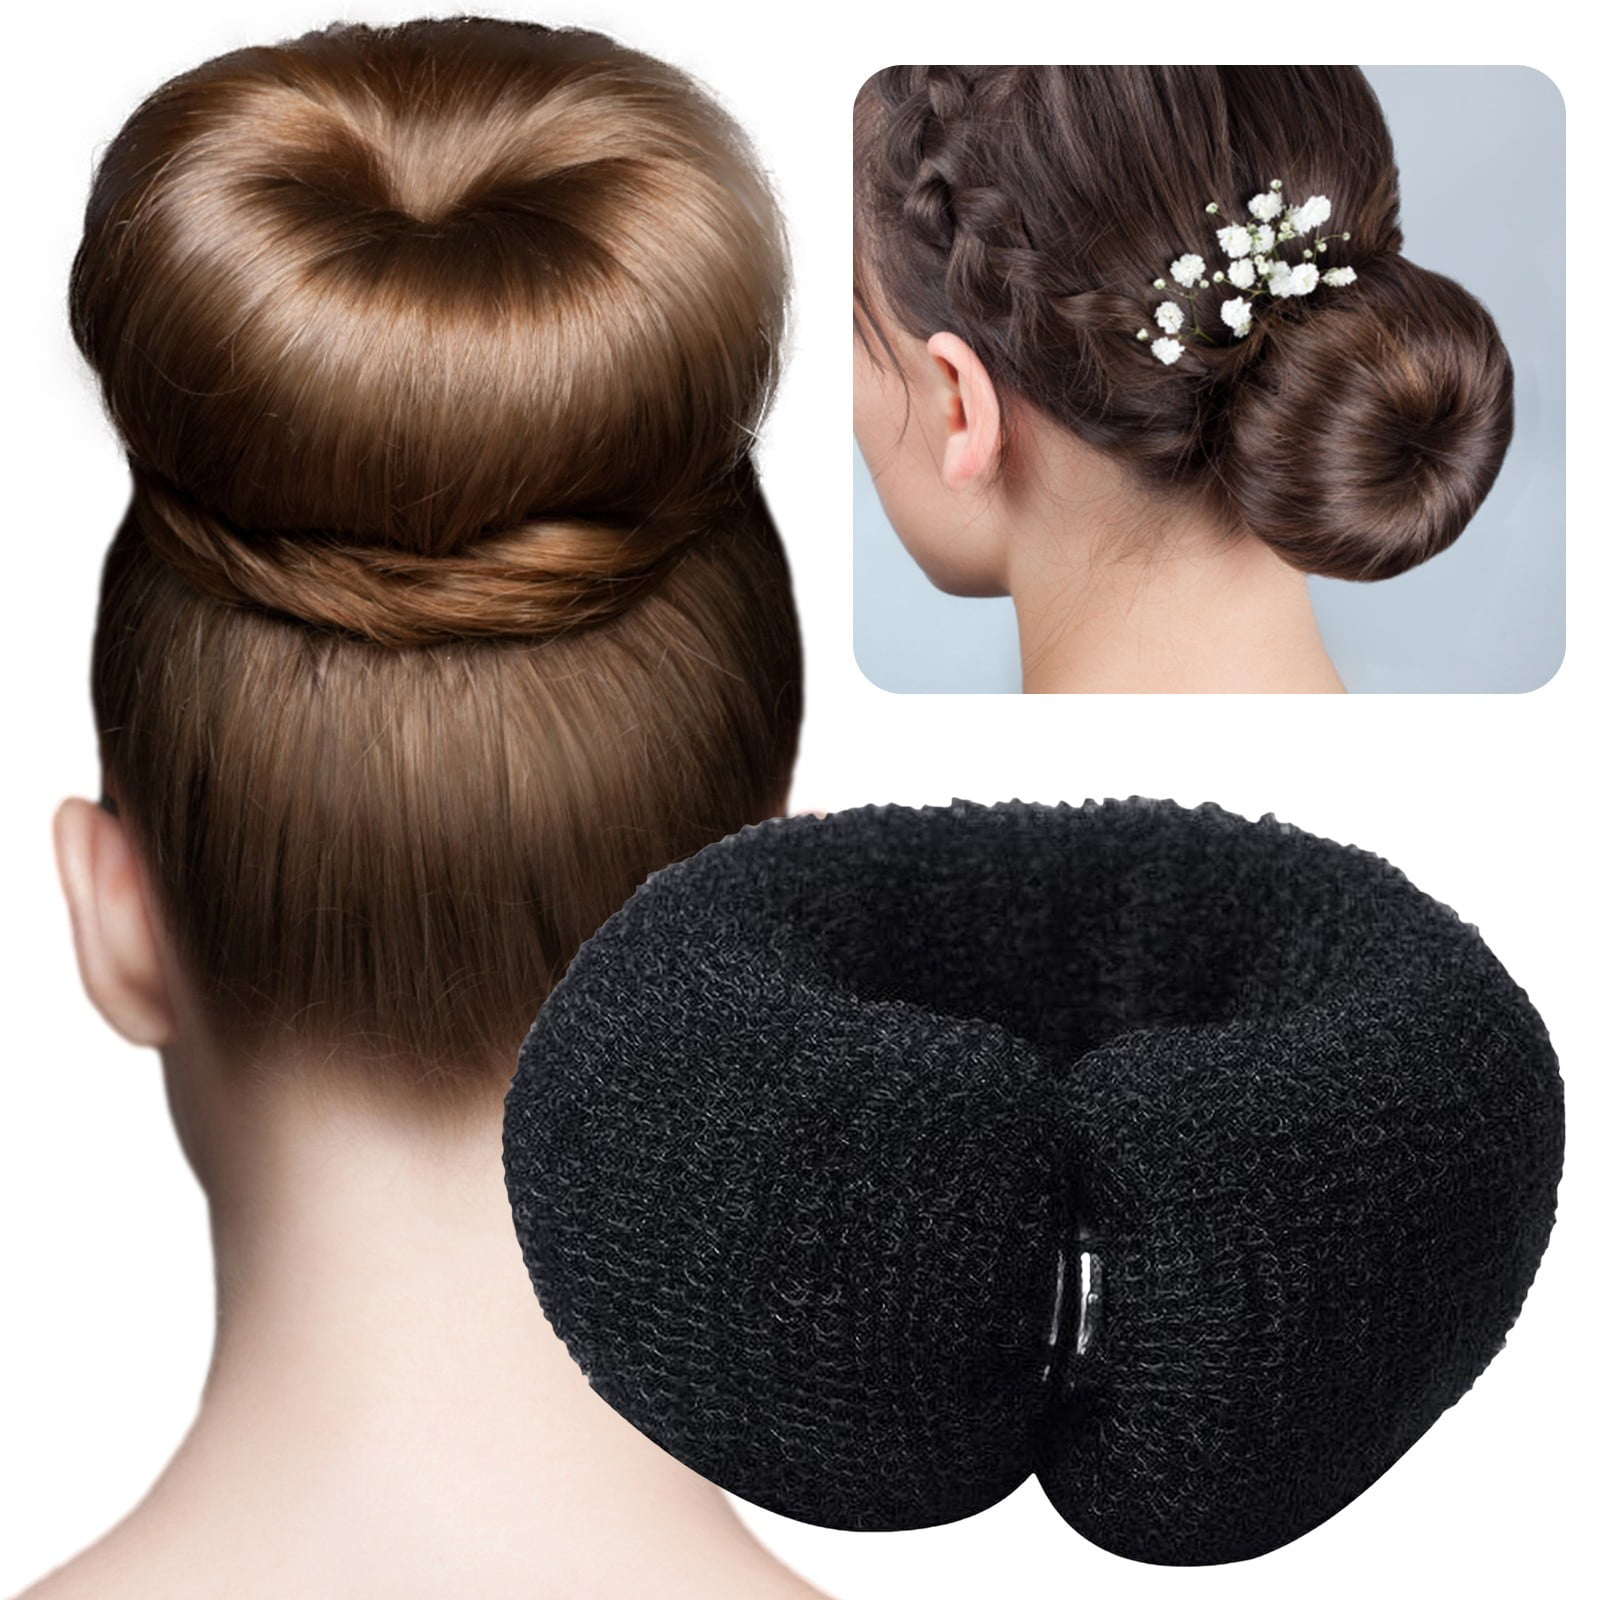 Hair Bun Maker Tool With Crystal Beads for Women Girls, Ponytail Low Bun  Donut Hair Accessories, Bridal Twist Headwear Jewellery, Gift UK - Etsy